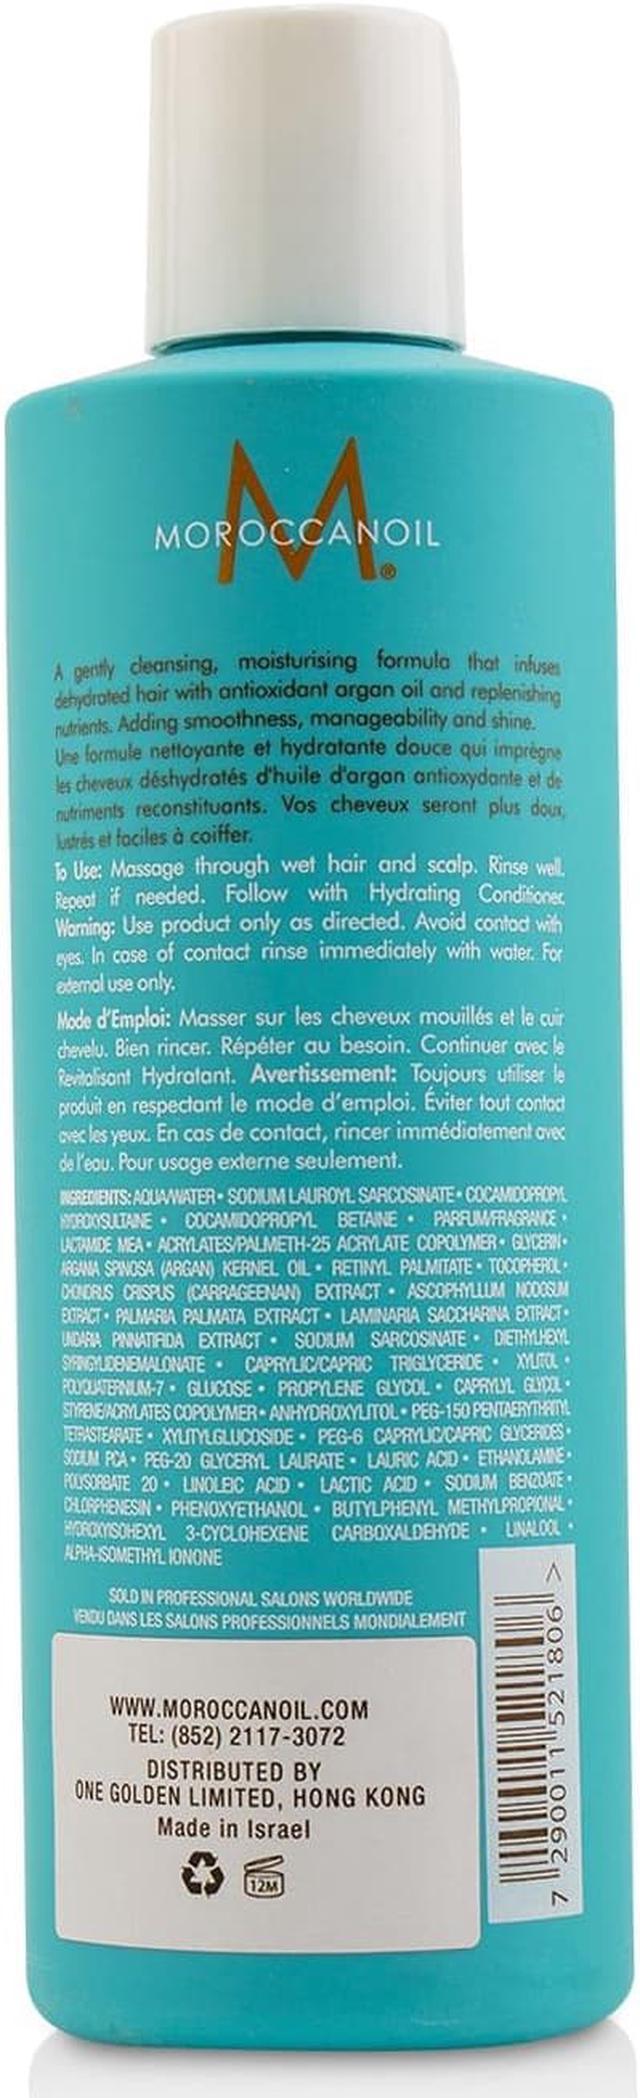 Moroccanoil Hydrating Shampoo 250ml - Vidals